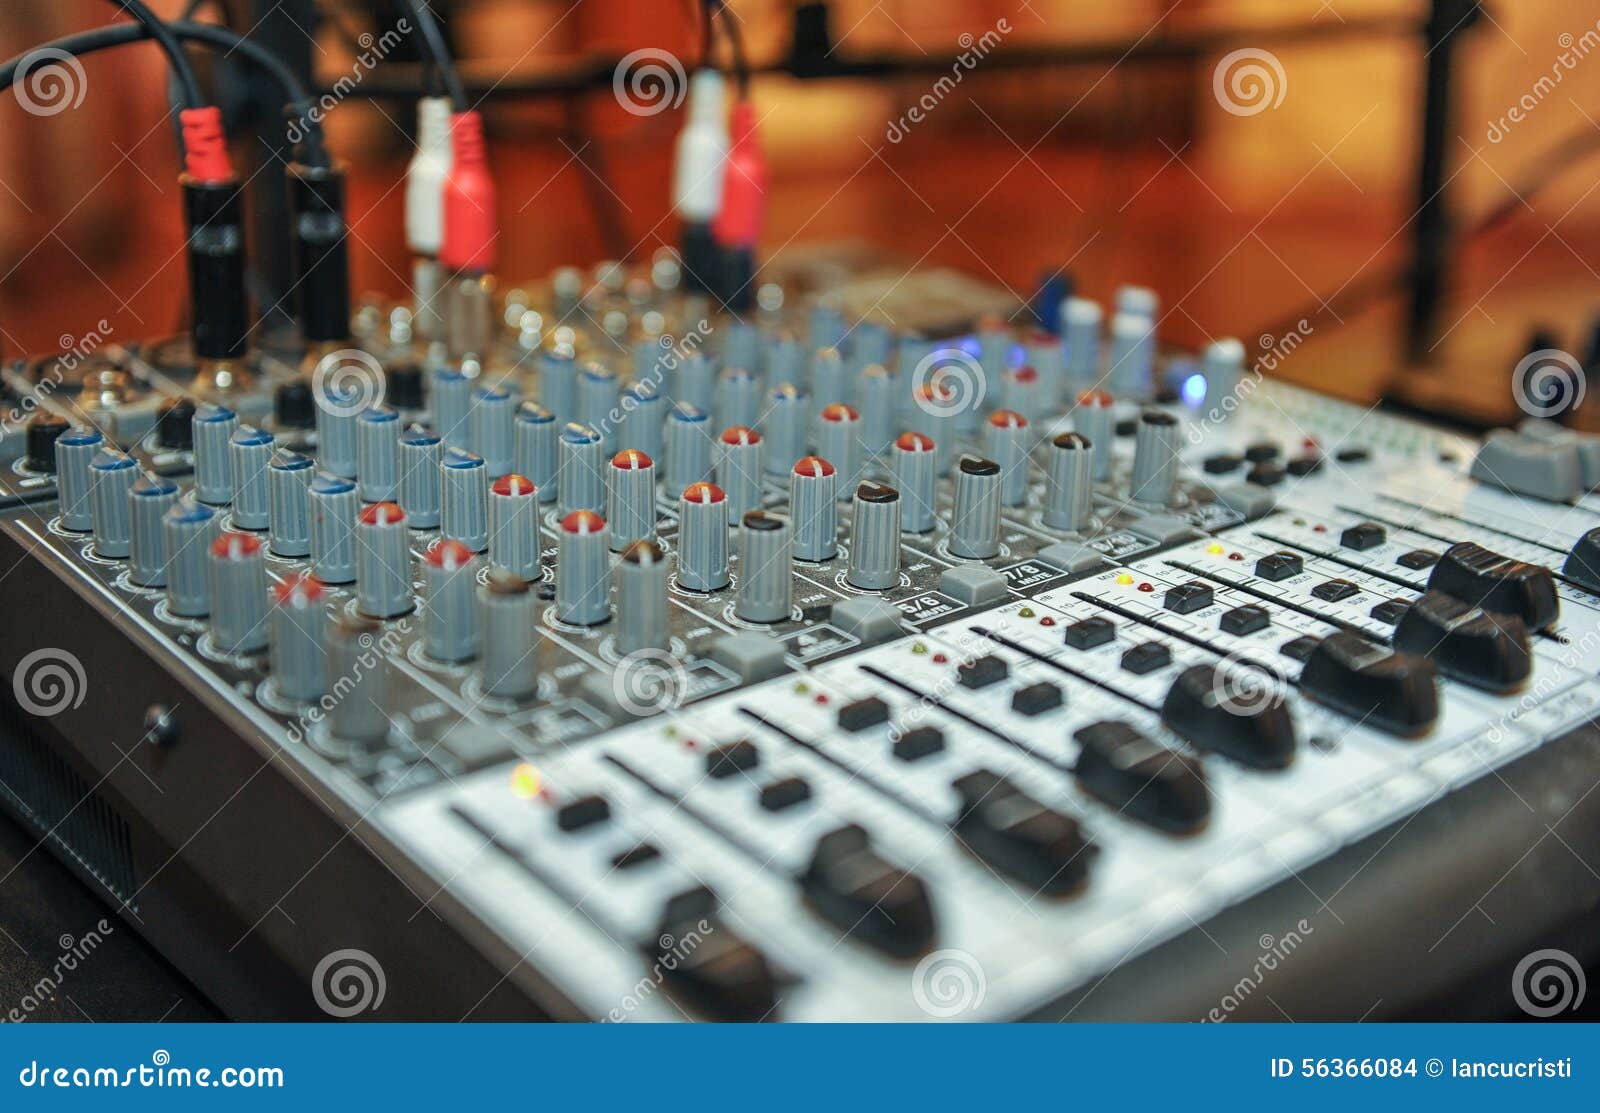 Audio Mixer, Music Equipment. Recording Studio Gears, Broadcasting